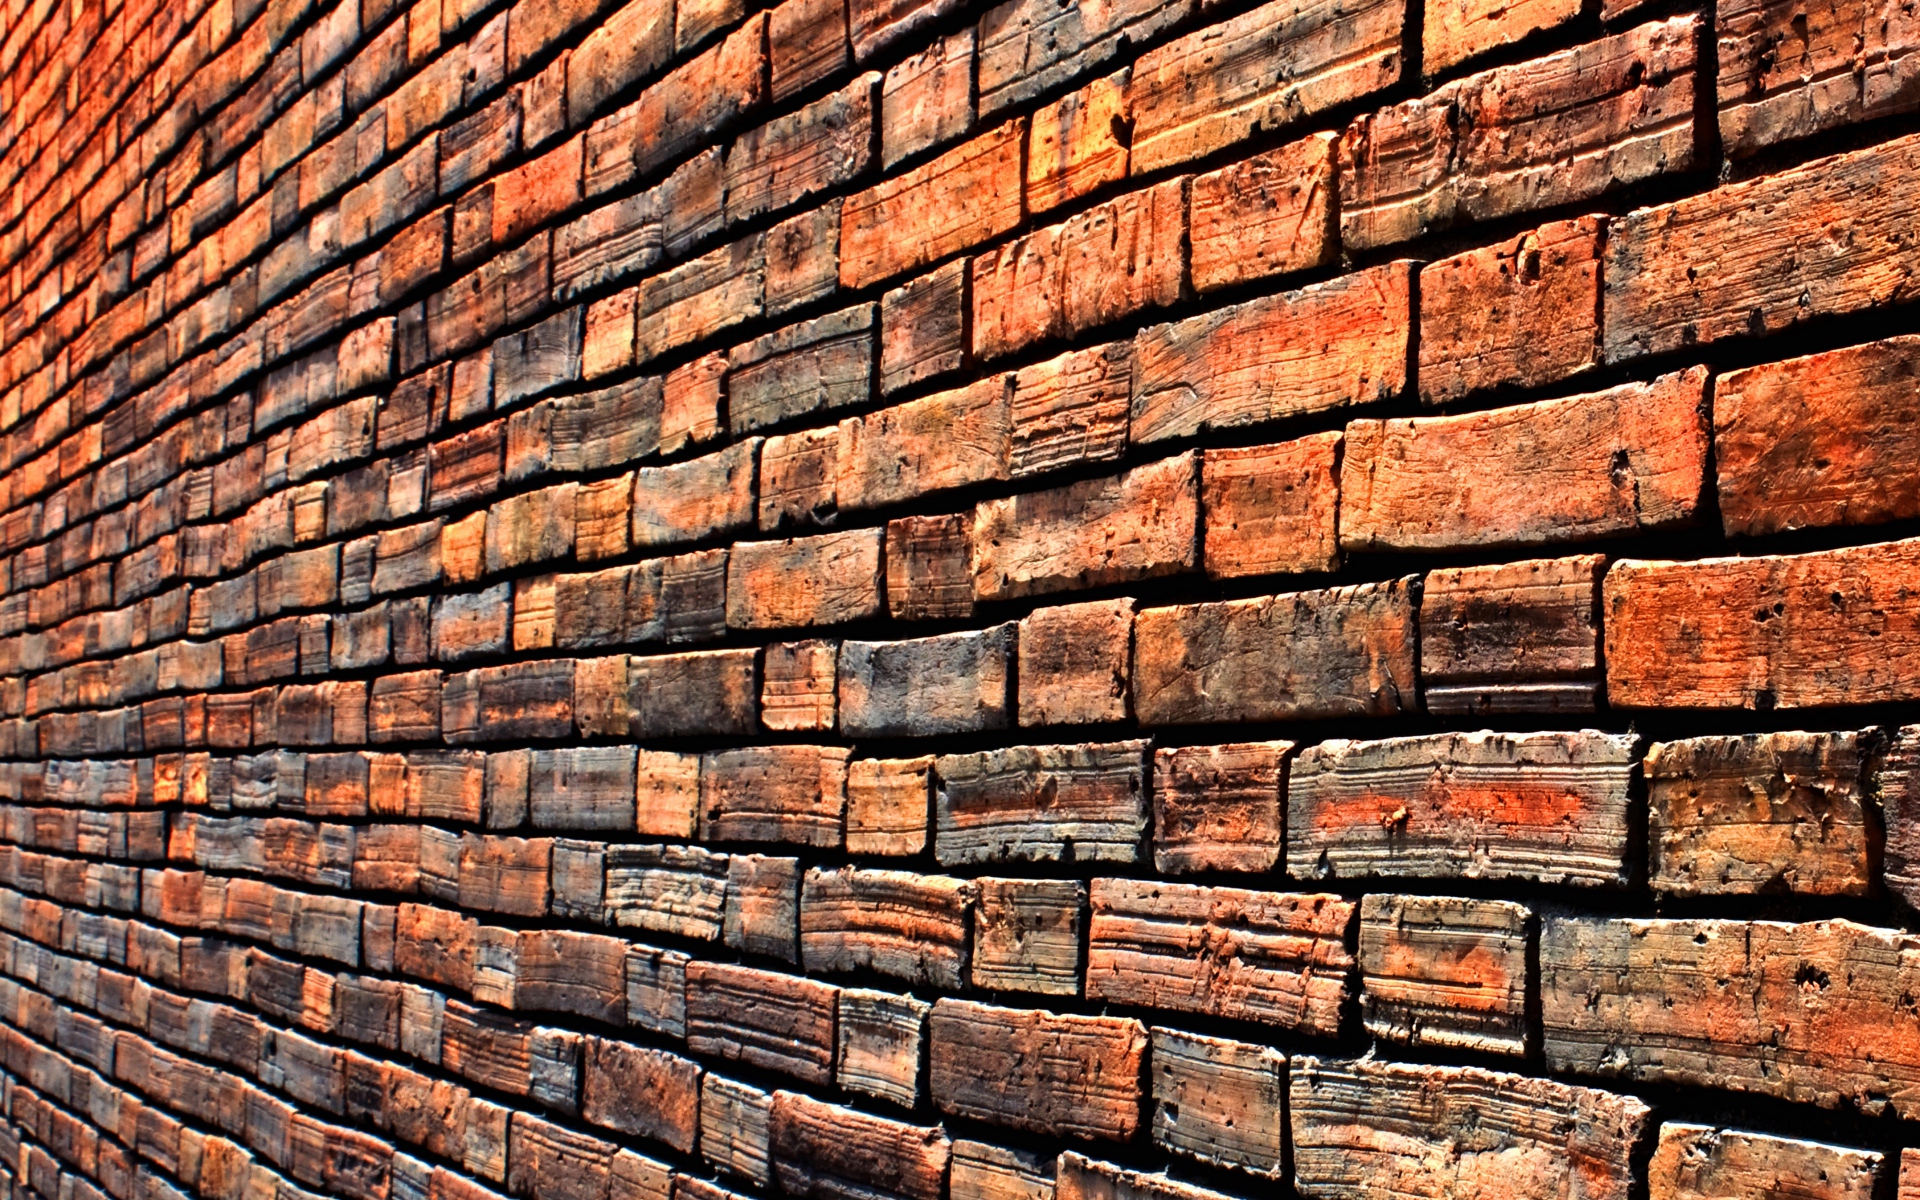 brick wall wallpaper,brickwork,brick,wall,stone wall,pattern